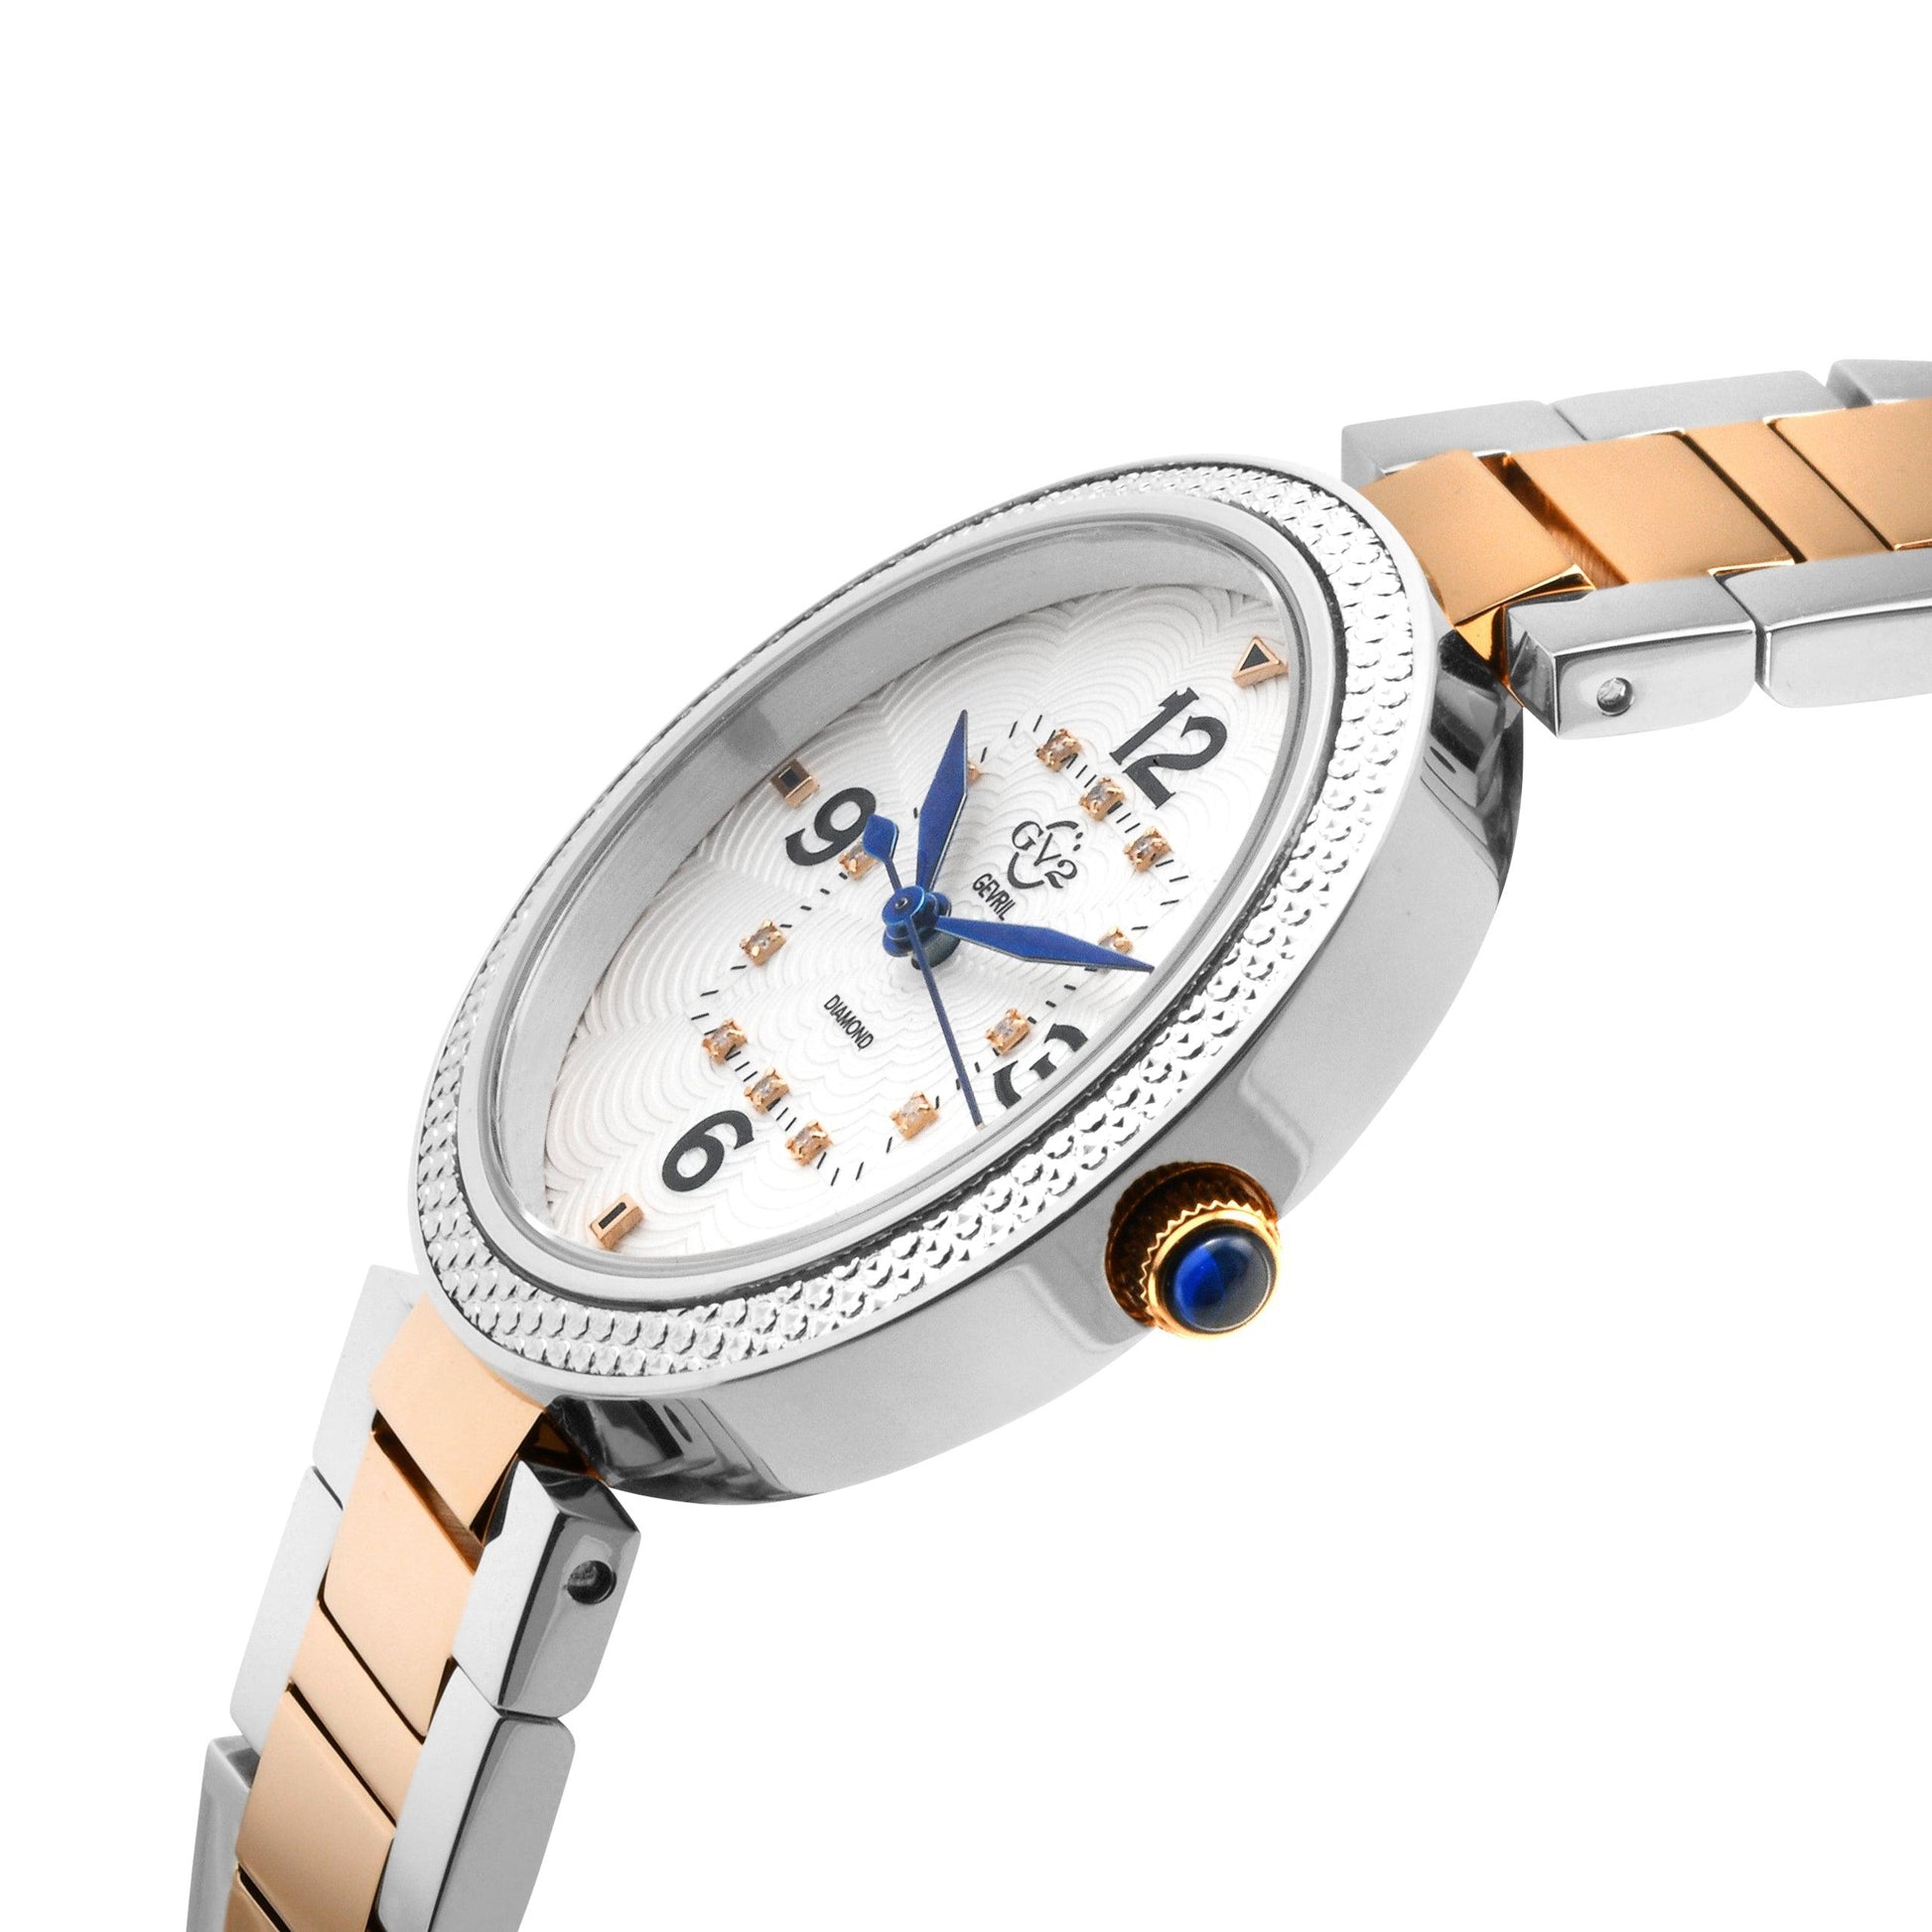 Gevril-Luxury-Swiss-Watches-GV2 Piemonte Diamond-14204B